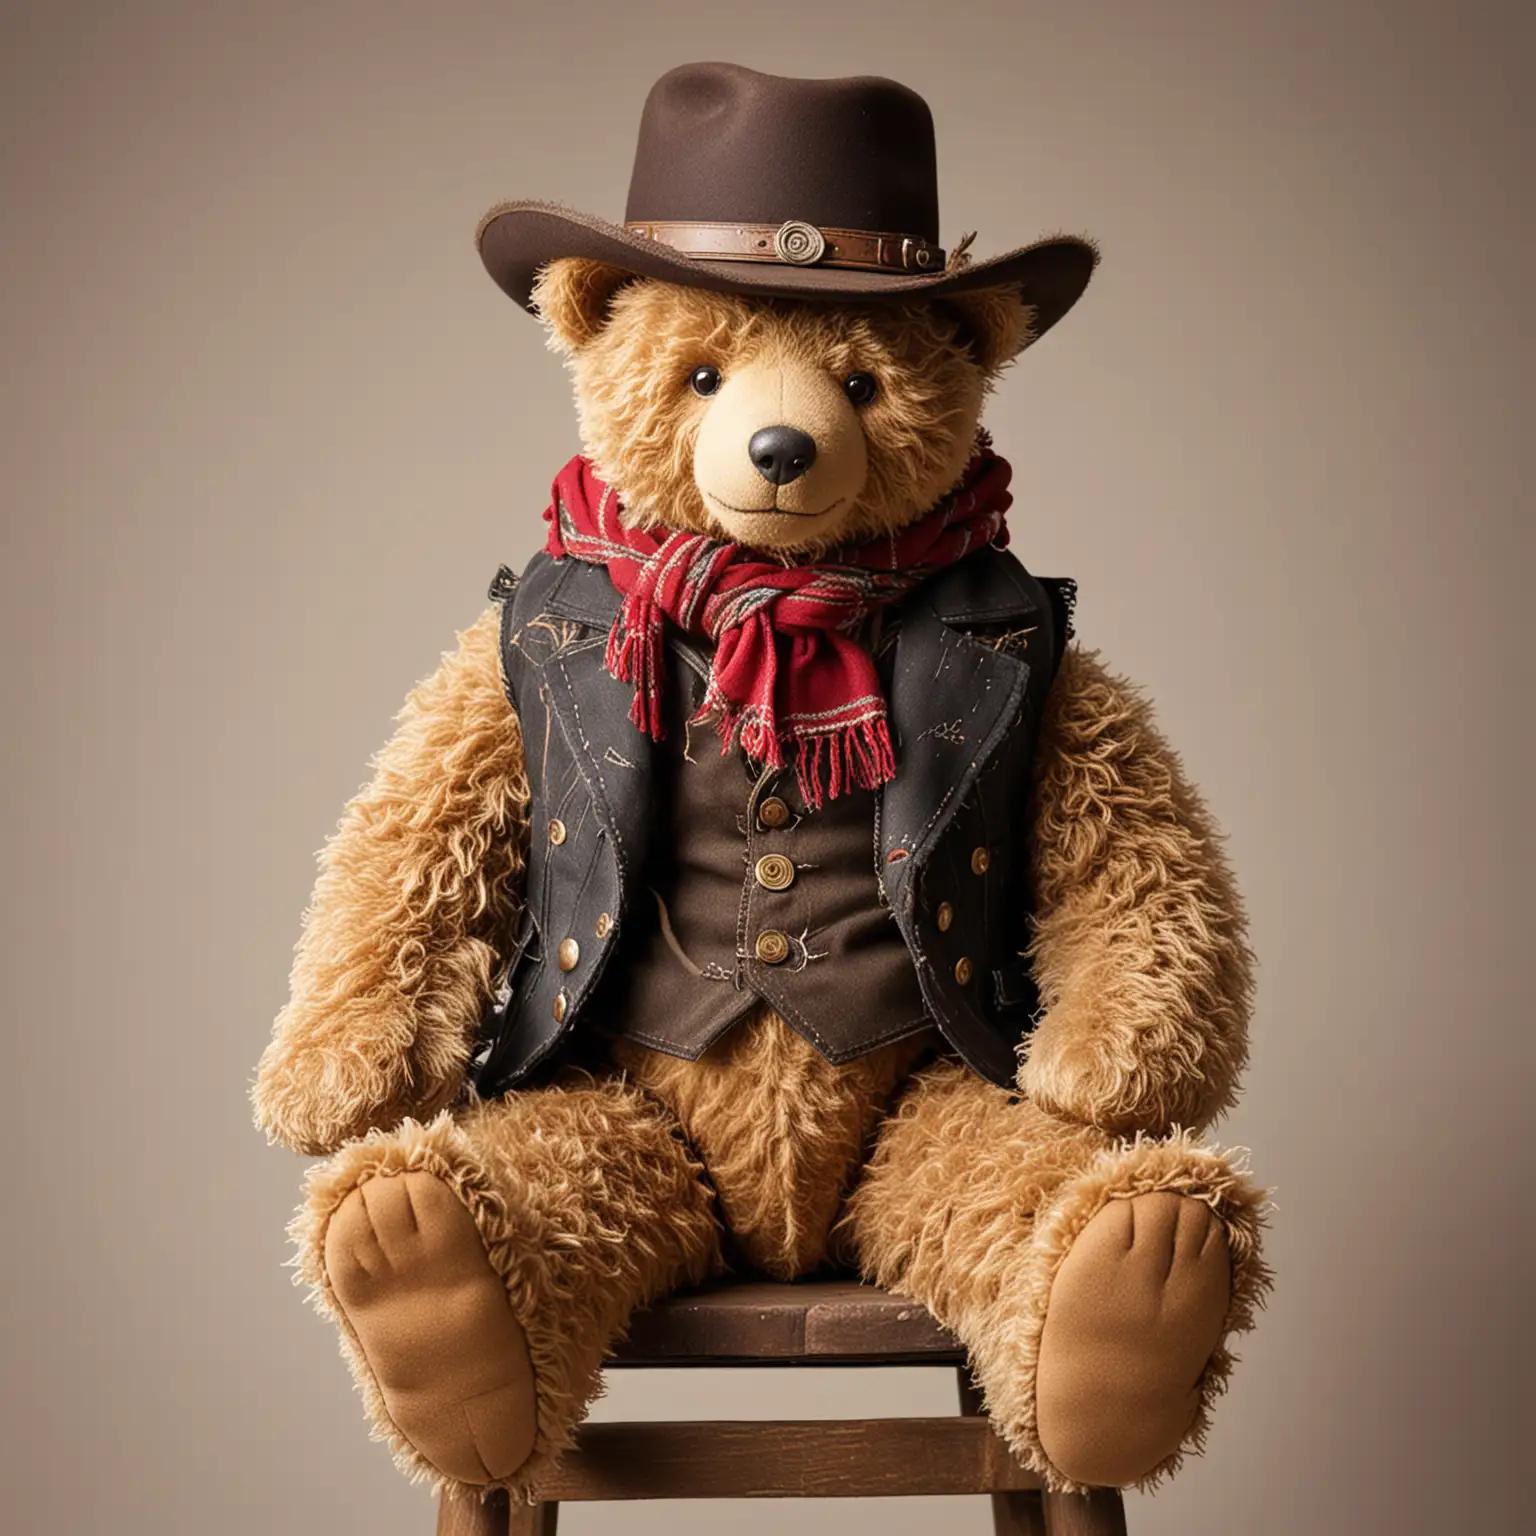 Vintage Teddy Bear Cowboys Seated with Classic Western Attire